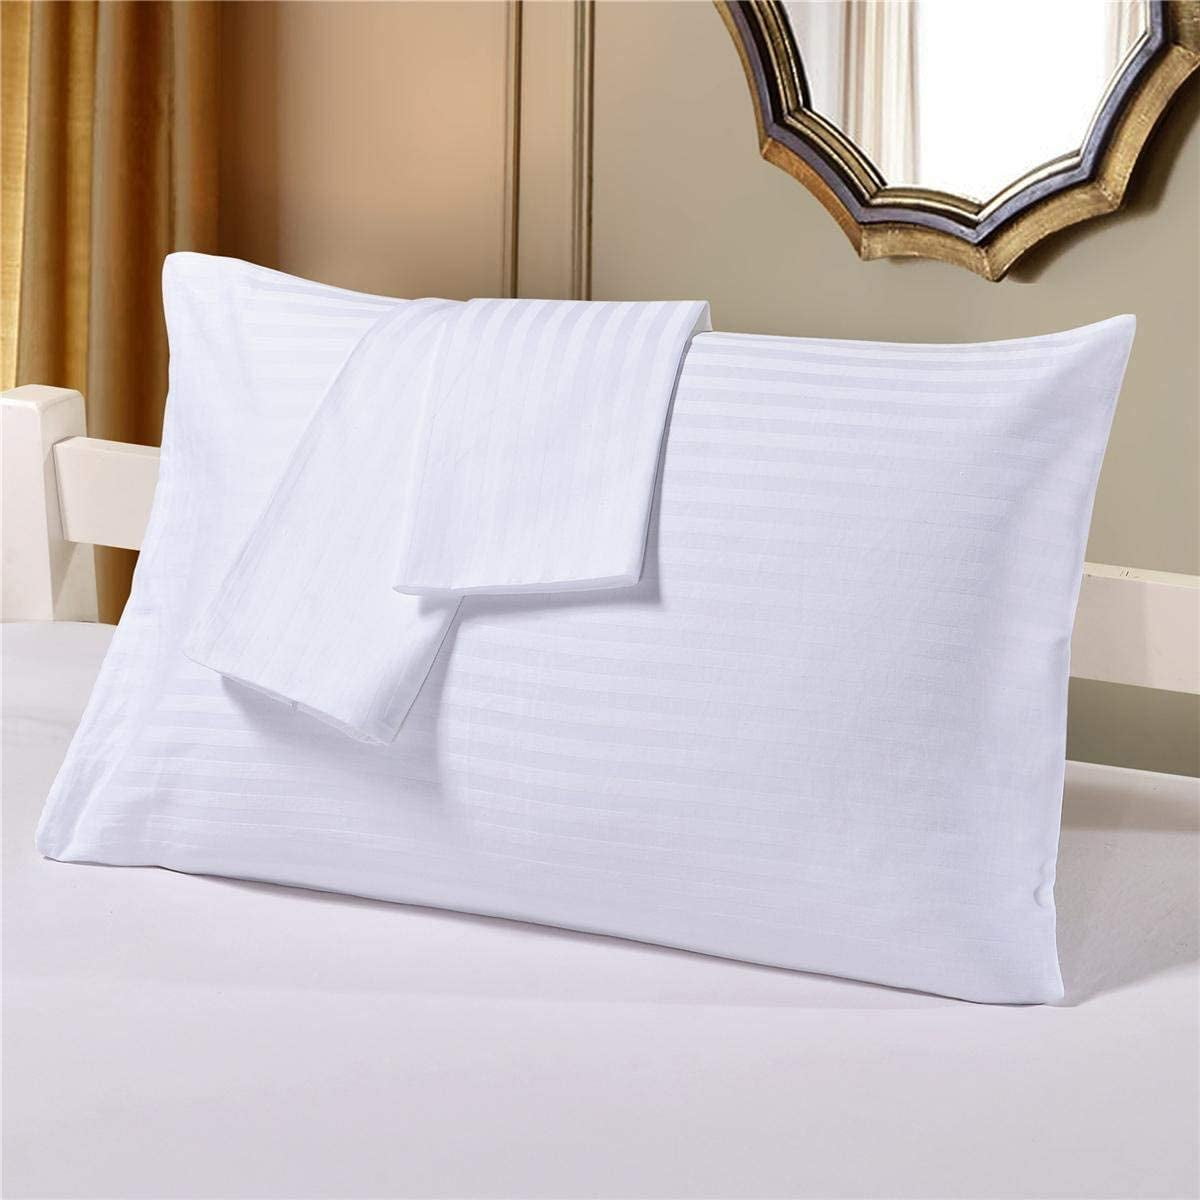 Travel Pillow Case 14X20 Size Set of 2 Envelope Closure Toddler Pillowcase 600 Thread Count 100% Egyptian Cotton Travel Pillow Covers 14 x 20 White 